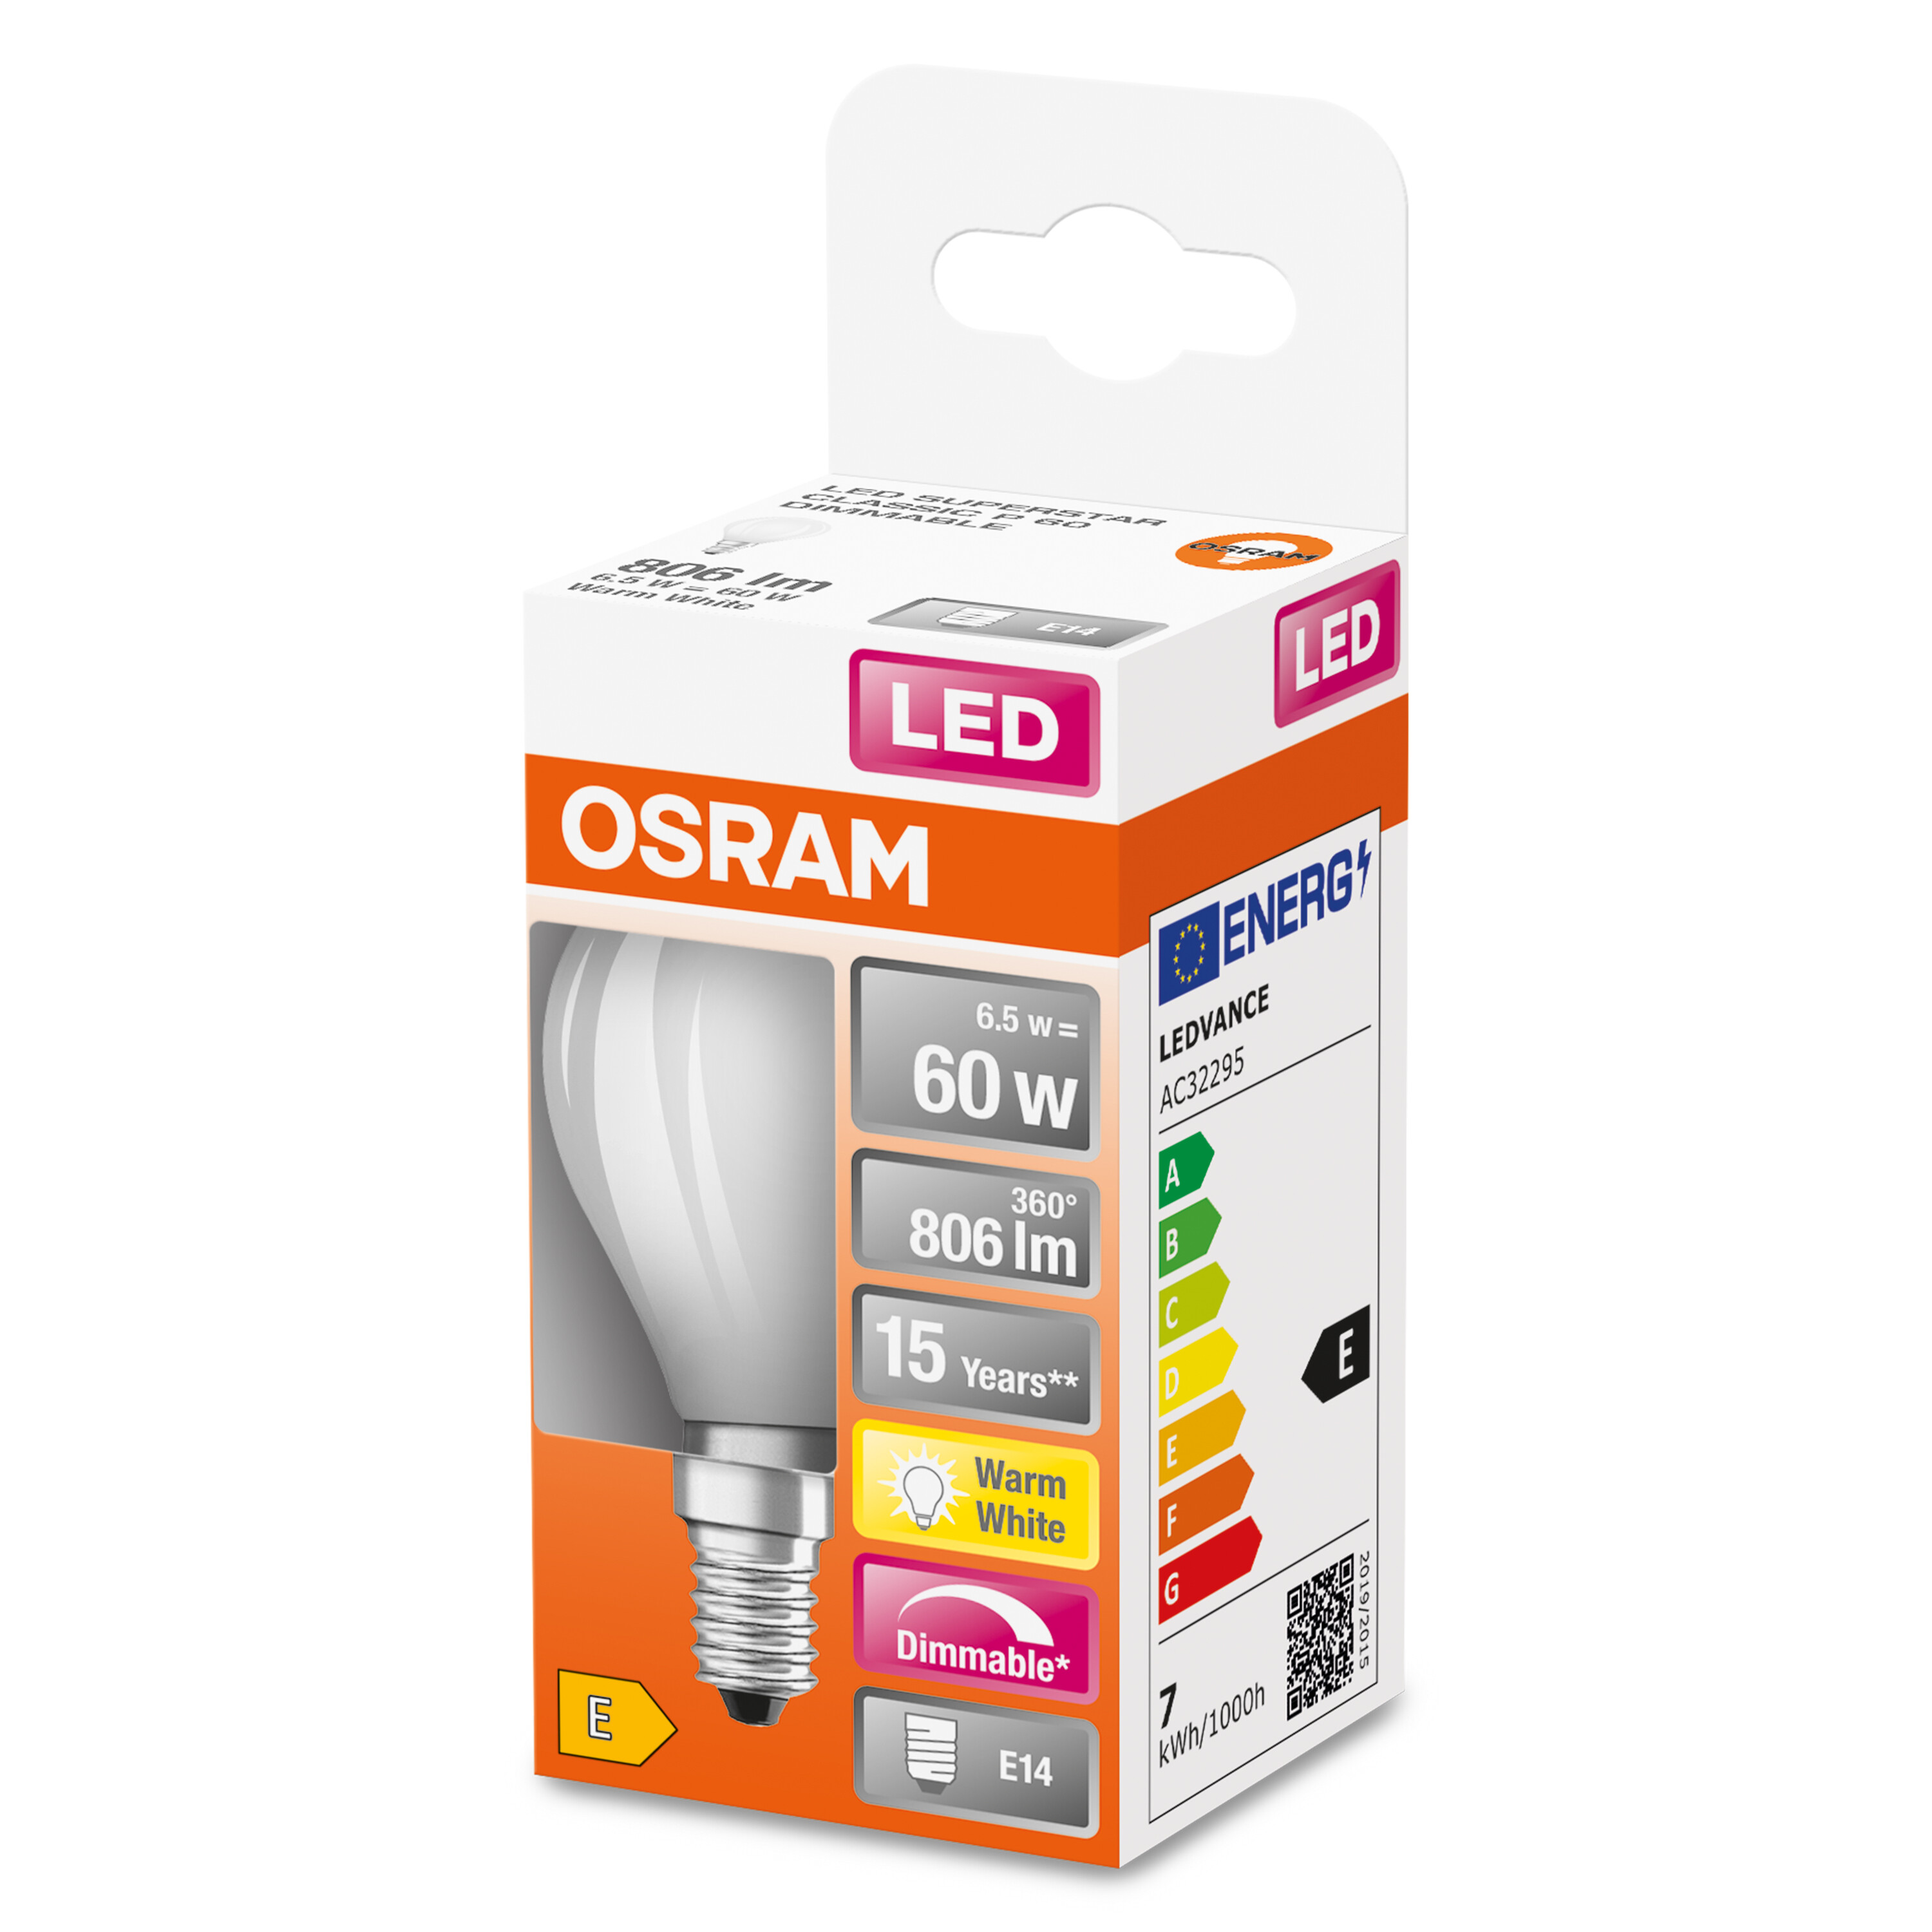 DIM Lumen 806 LED LED Warmweiß CLASSIC Retrofit Lampe OSRAM  P